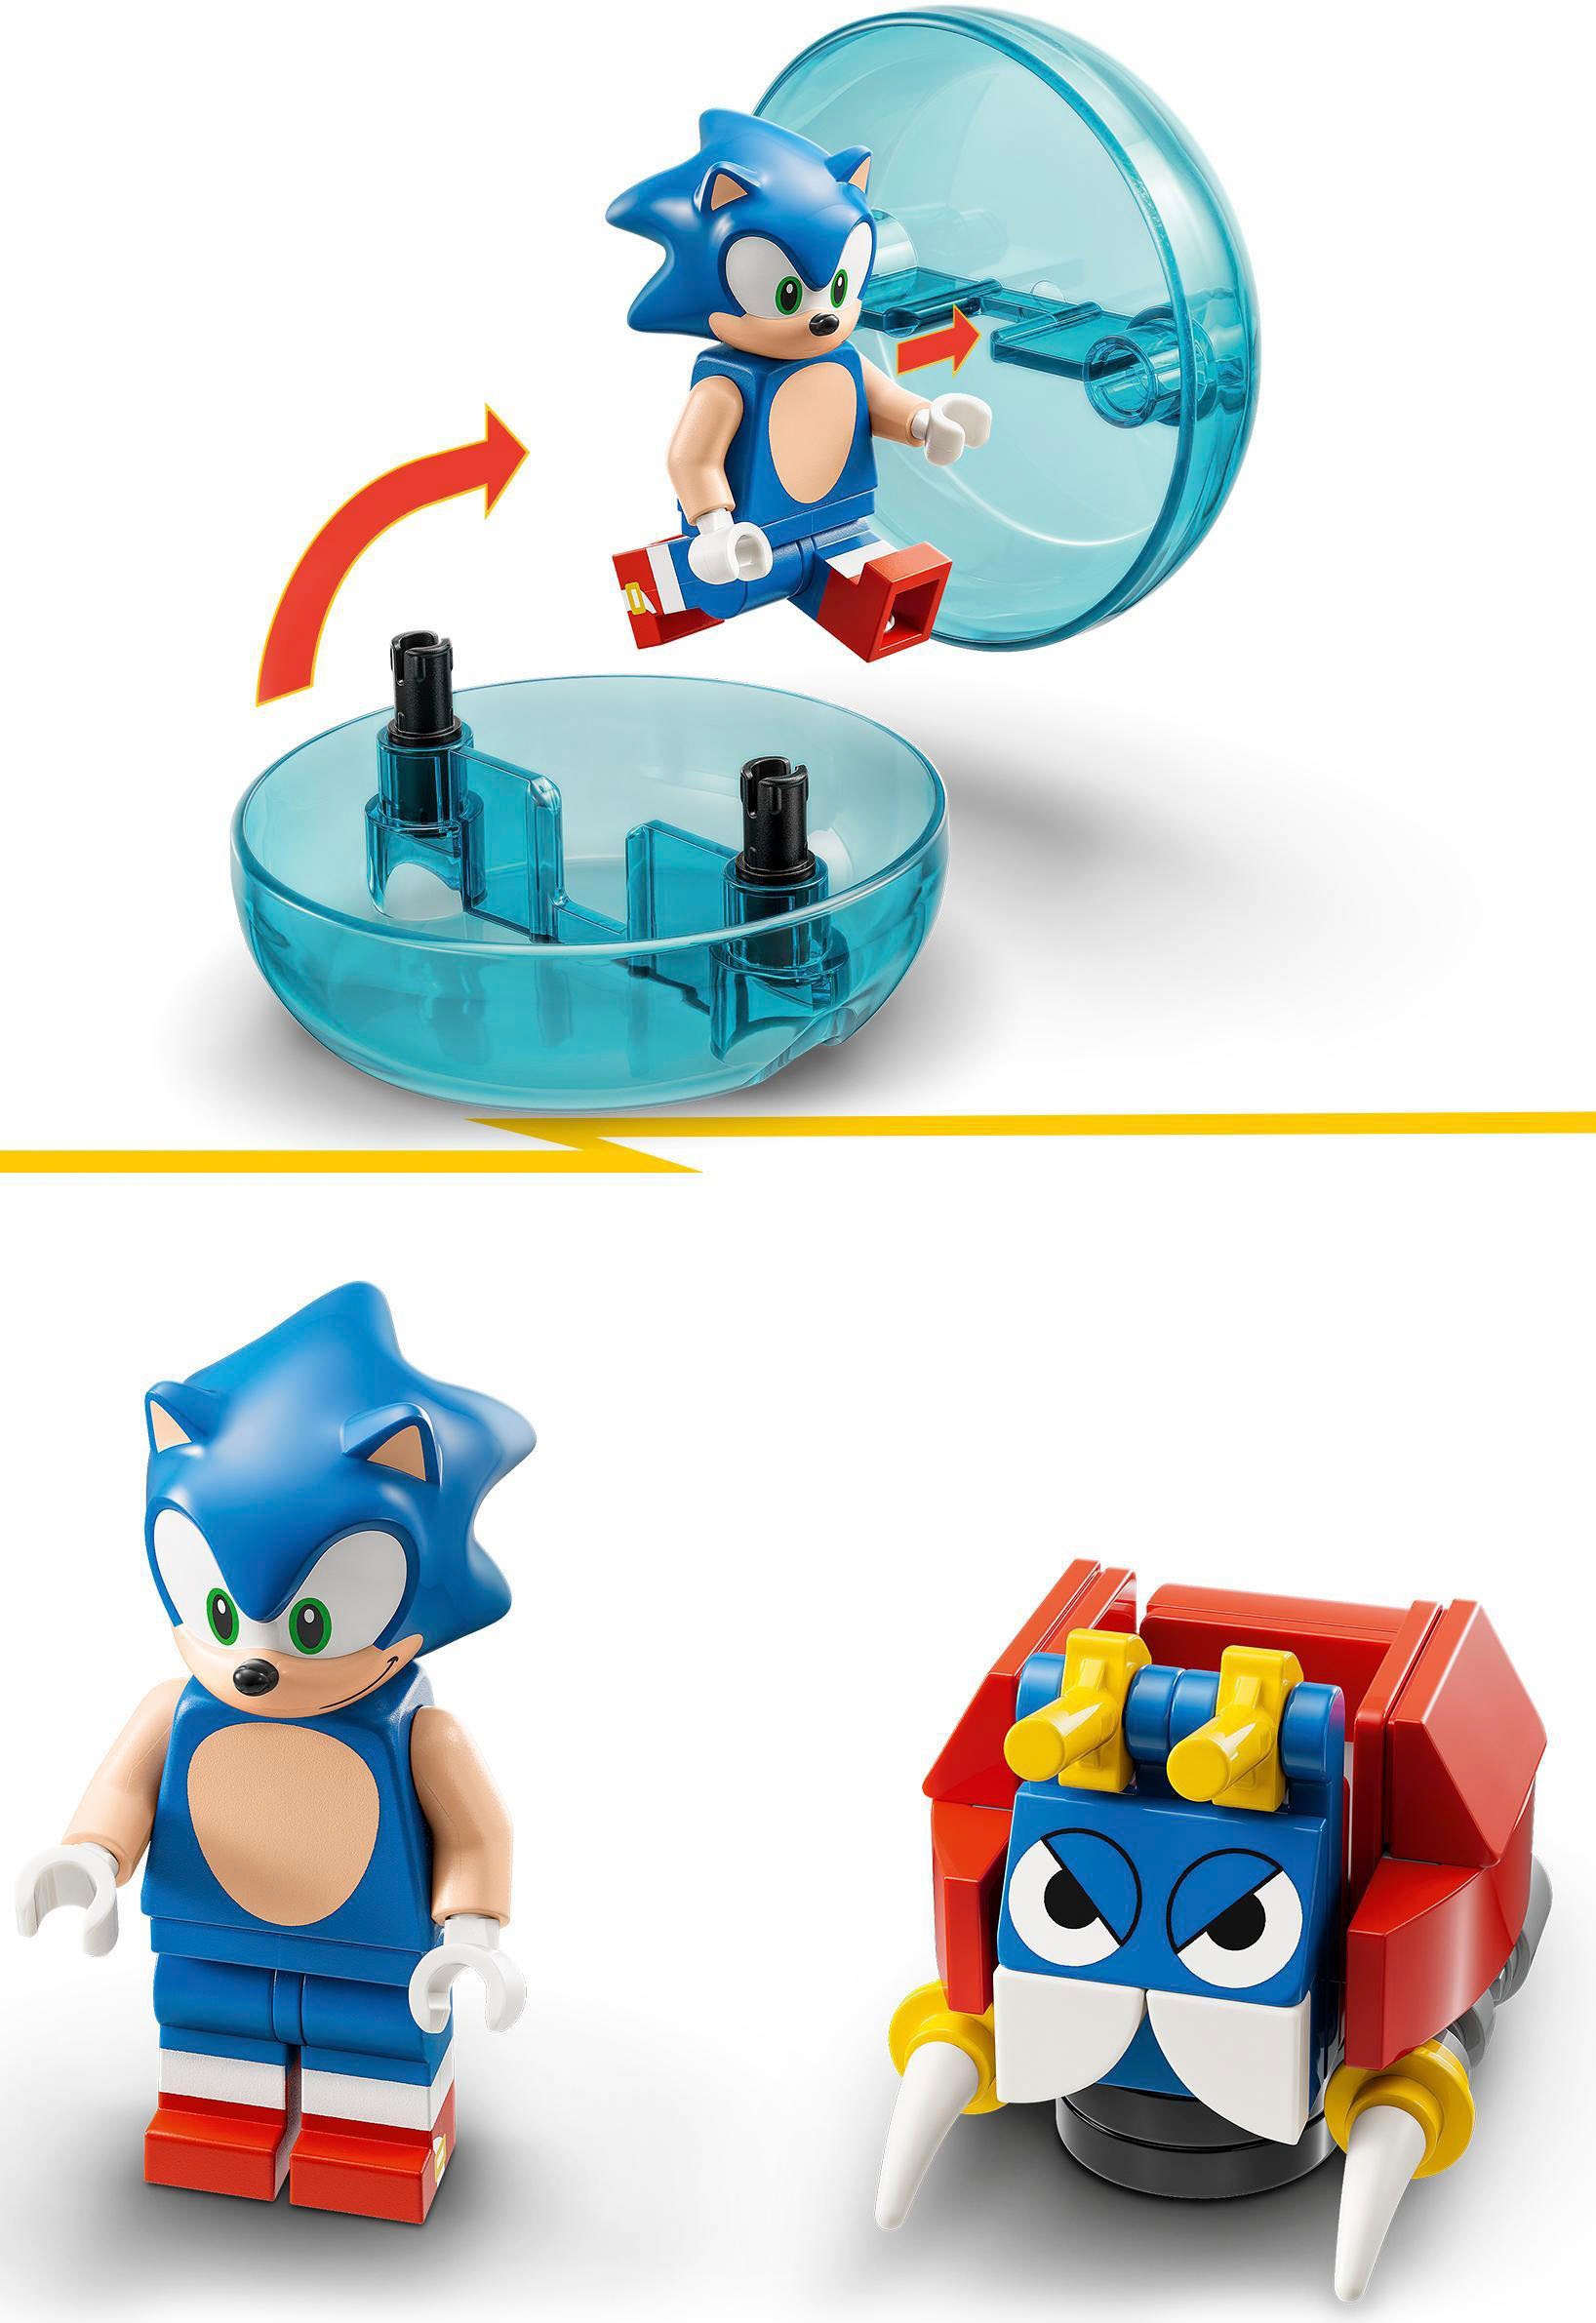 LEGO® Konstruktionsspielsteine »Sonics Kugel-Challenge (76990), LEGO® Sonic«, (292 St.), Made in Europe